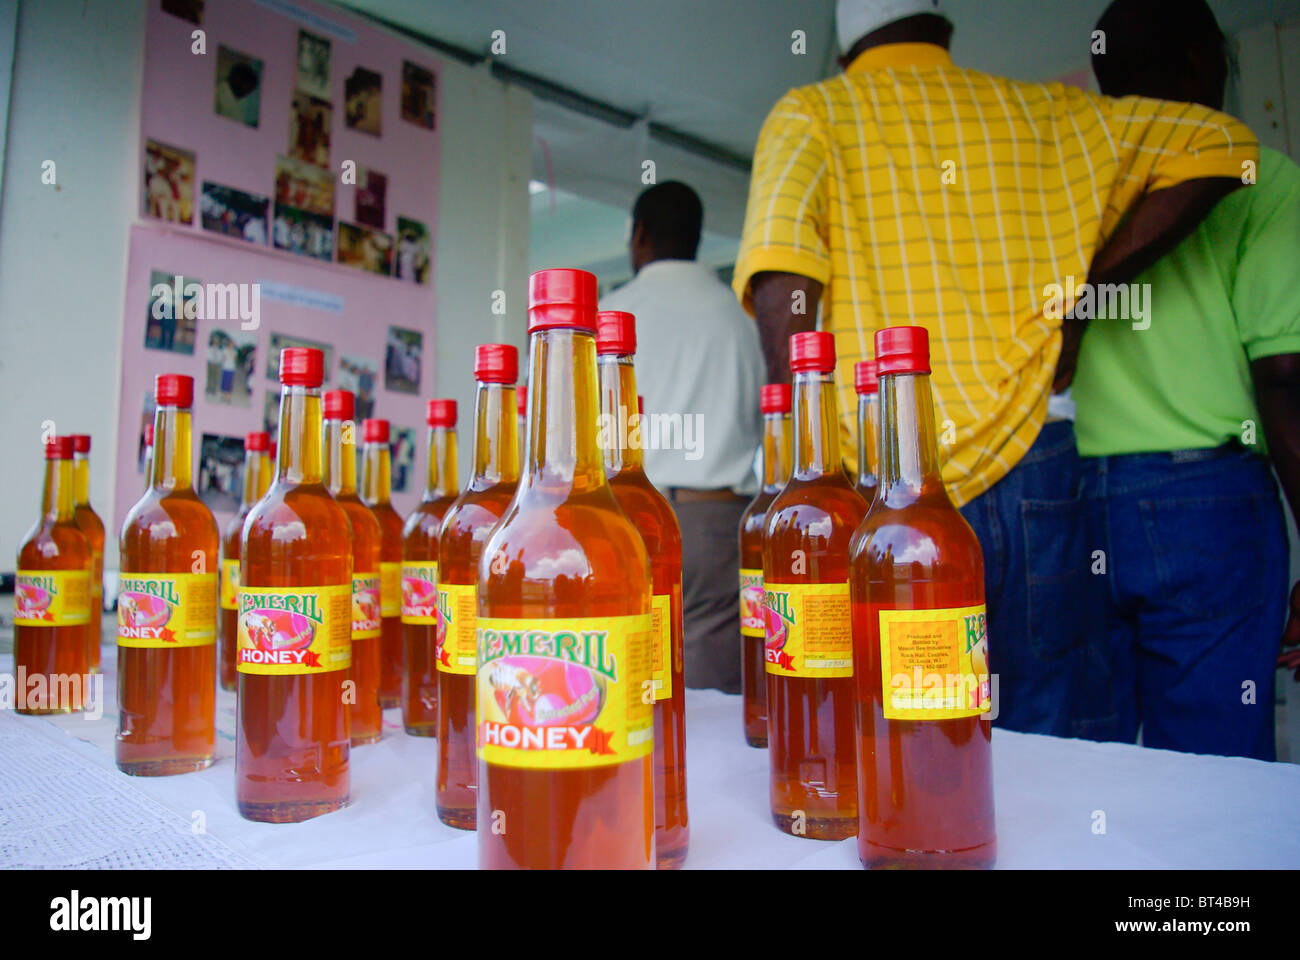 Kemeril honey. Bottles of honey on display at product exhibition Stock Photo